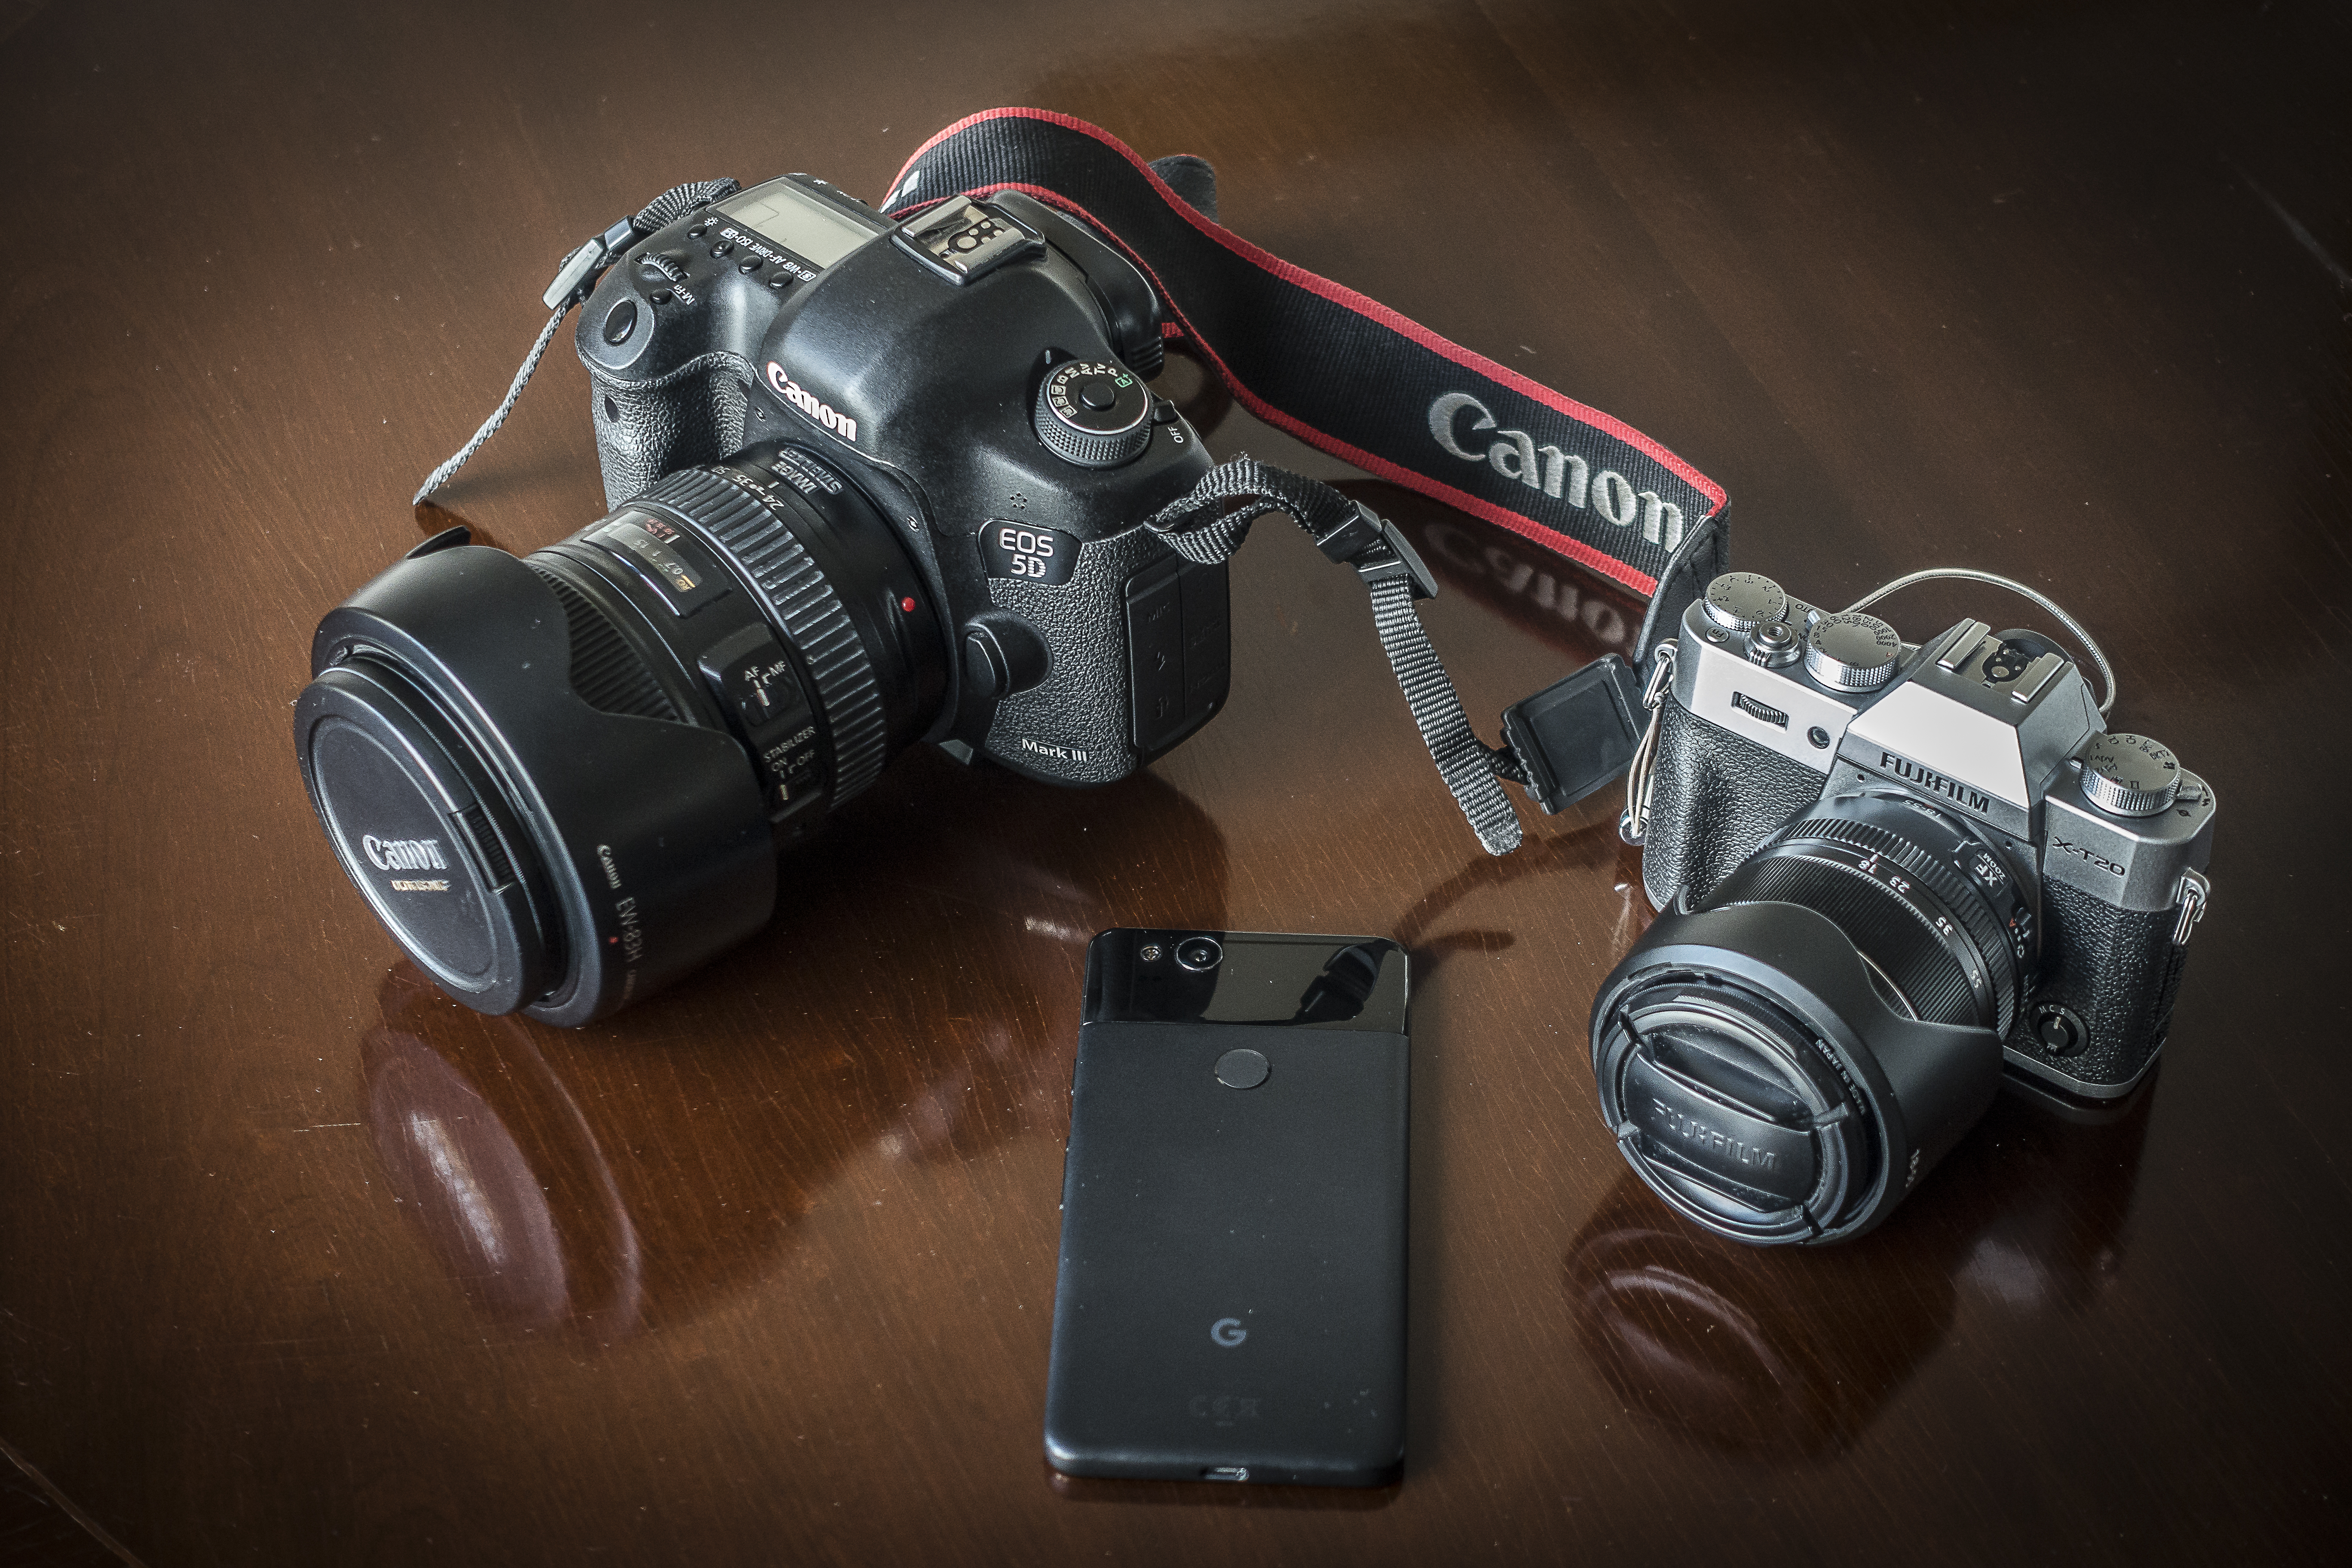 Three different cameras